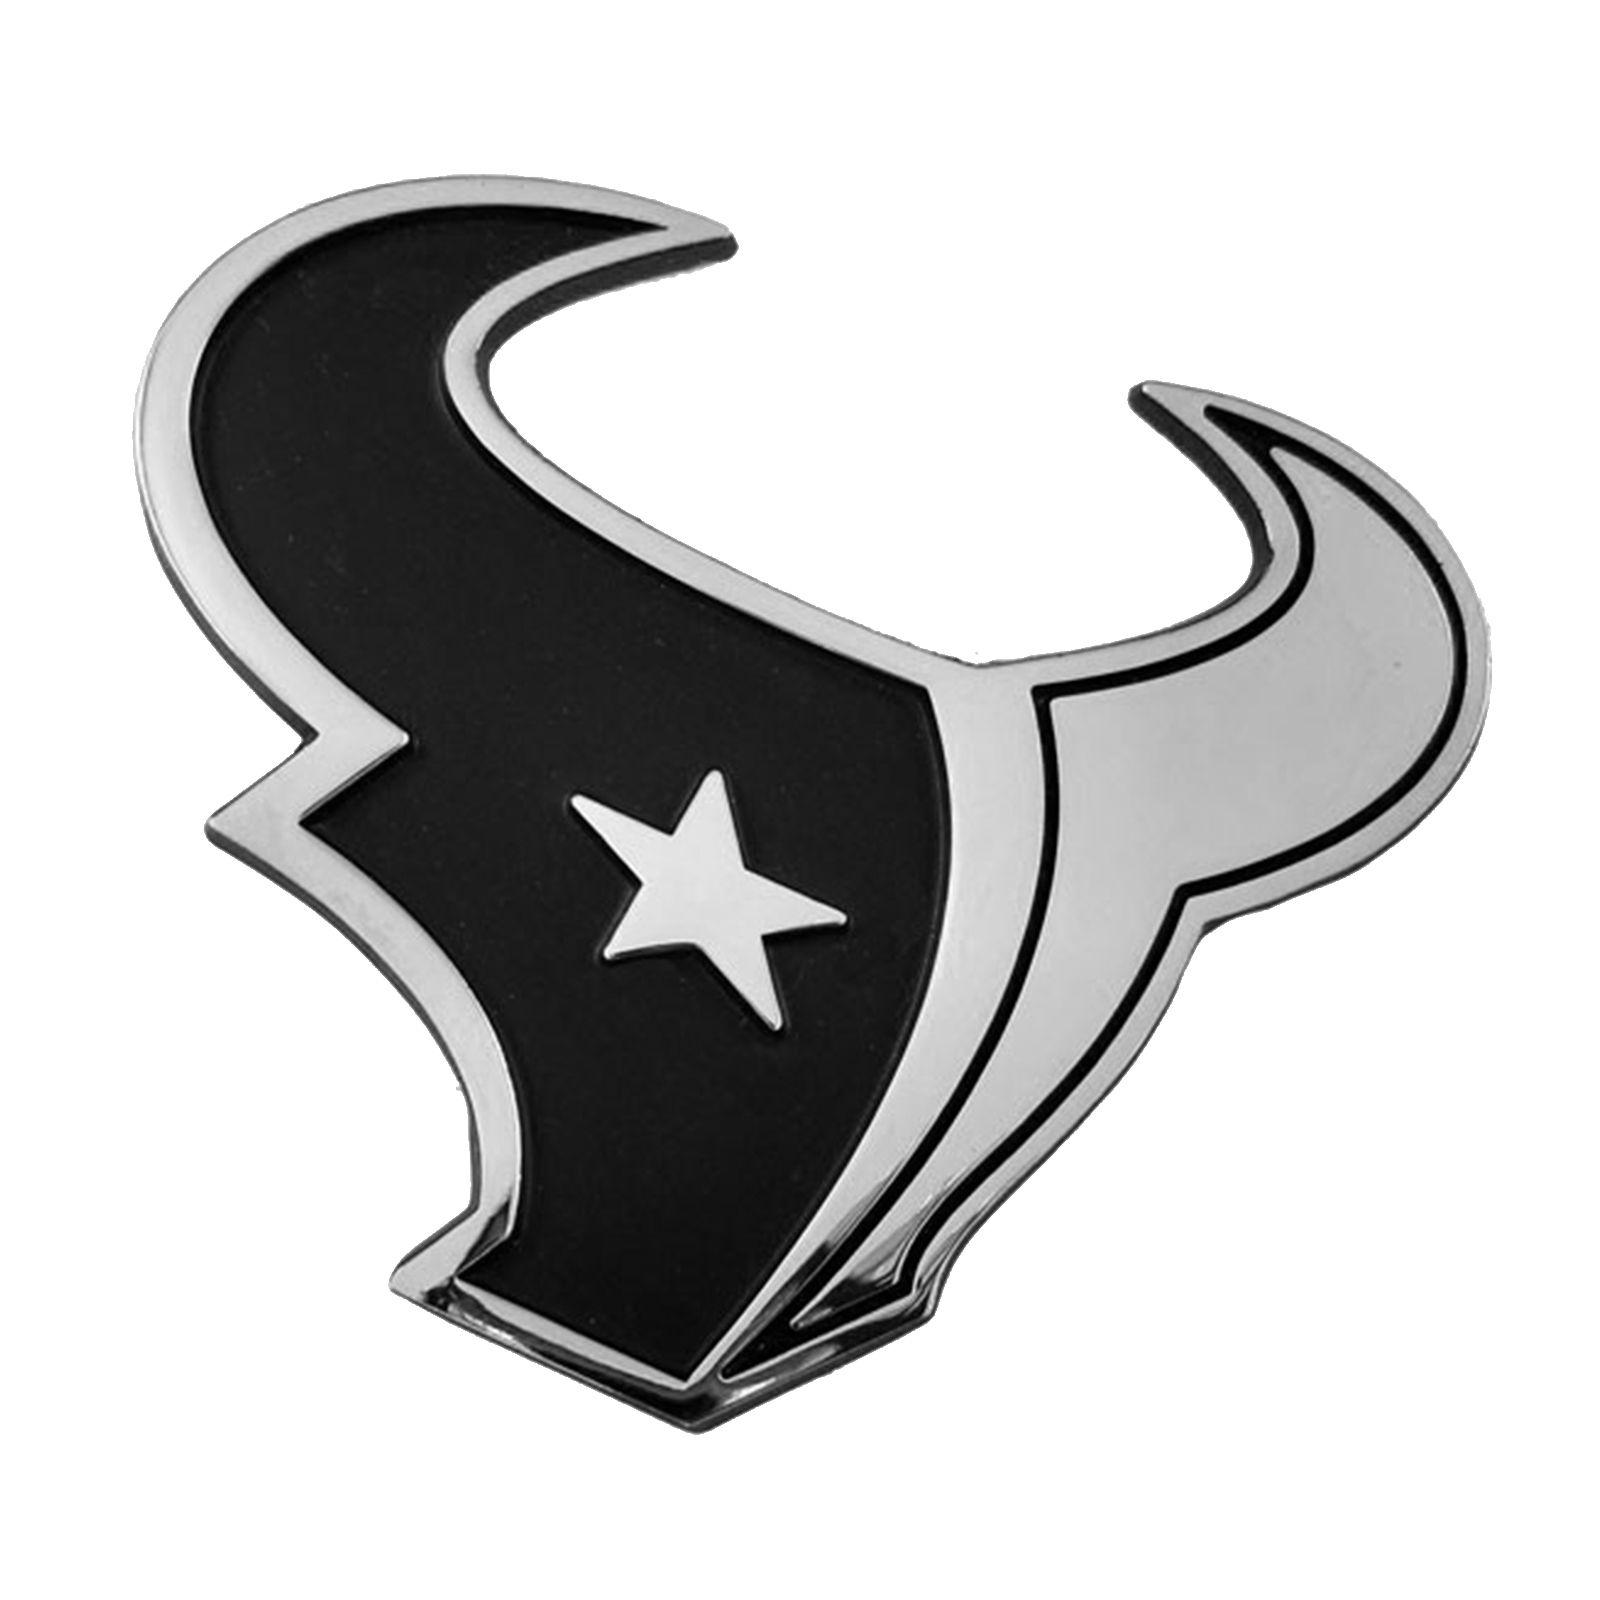 Texasn Logo - Details about Houston Texans Premium Solid Metal Chrome Auto Emblem Team  Logo Car Truck Logo